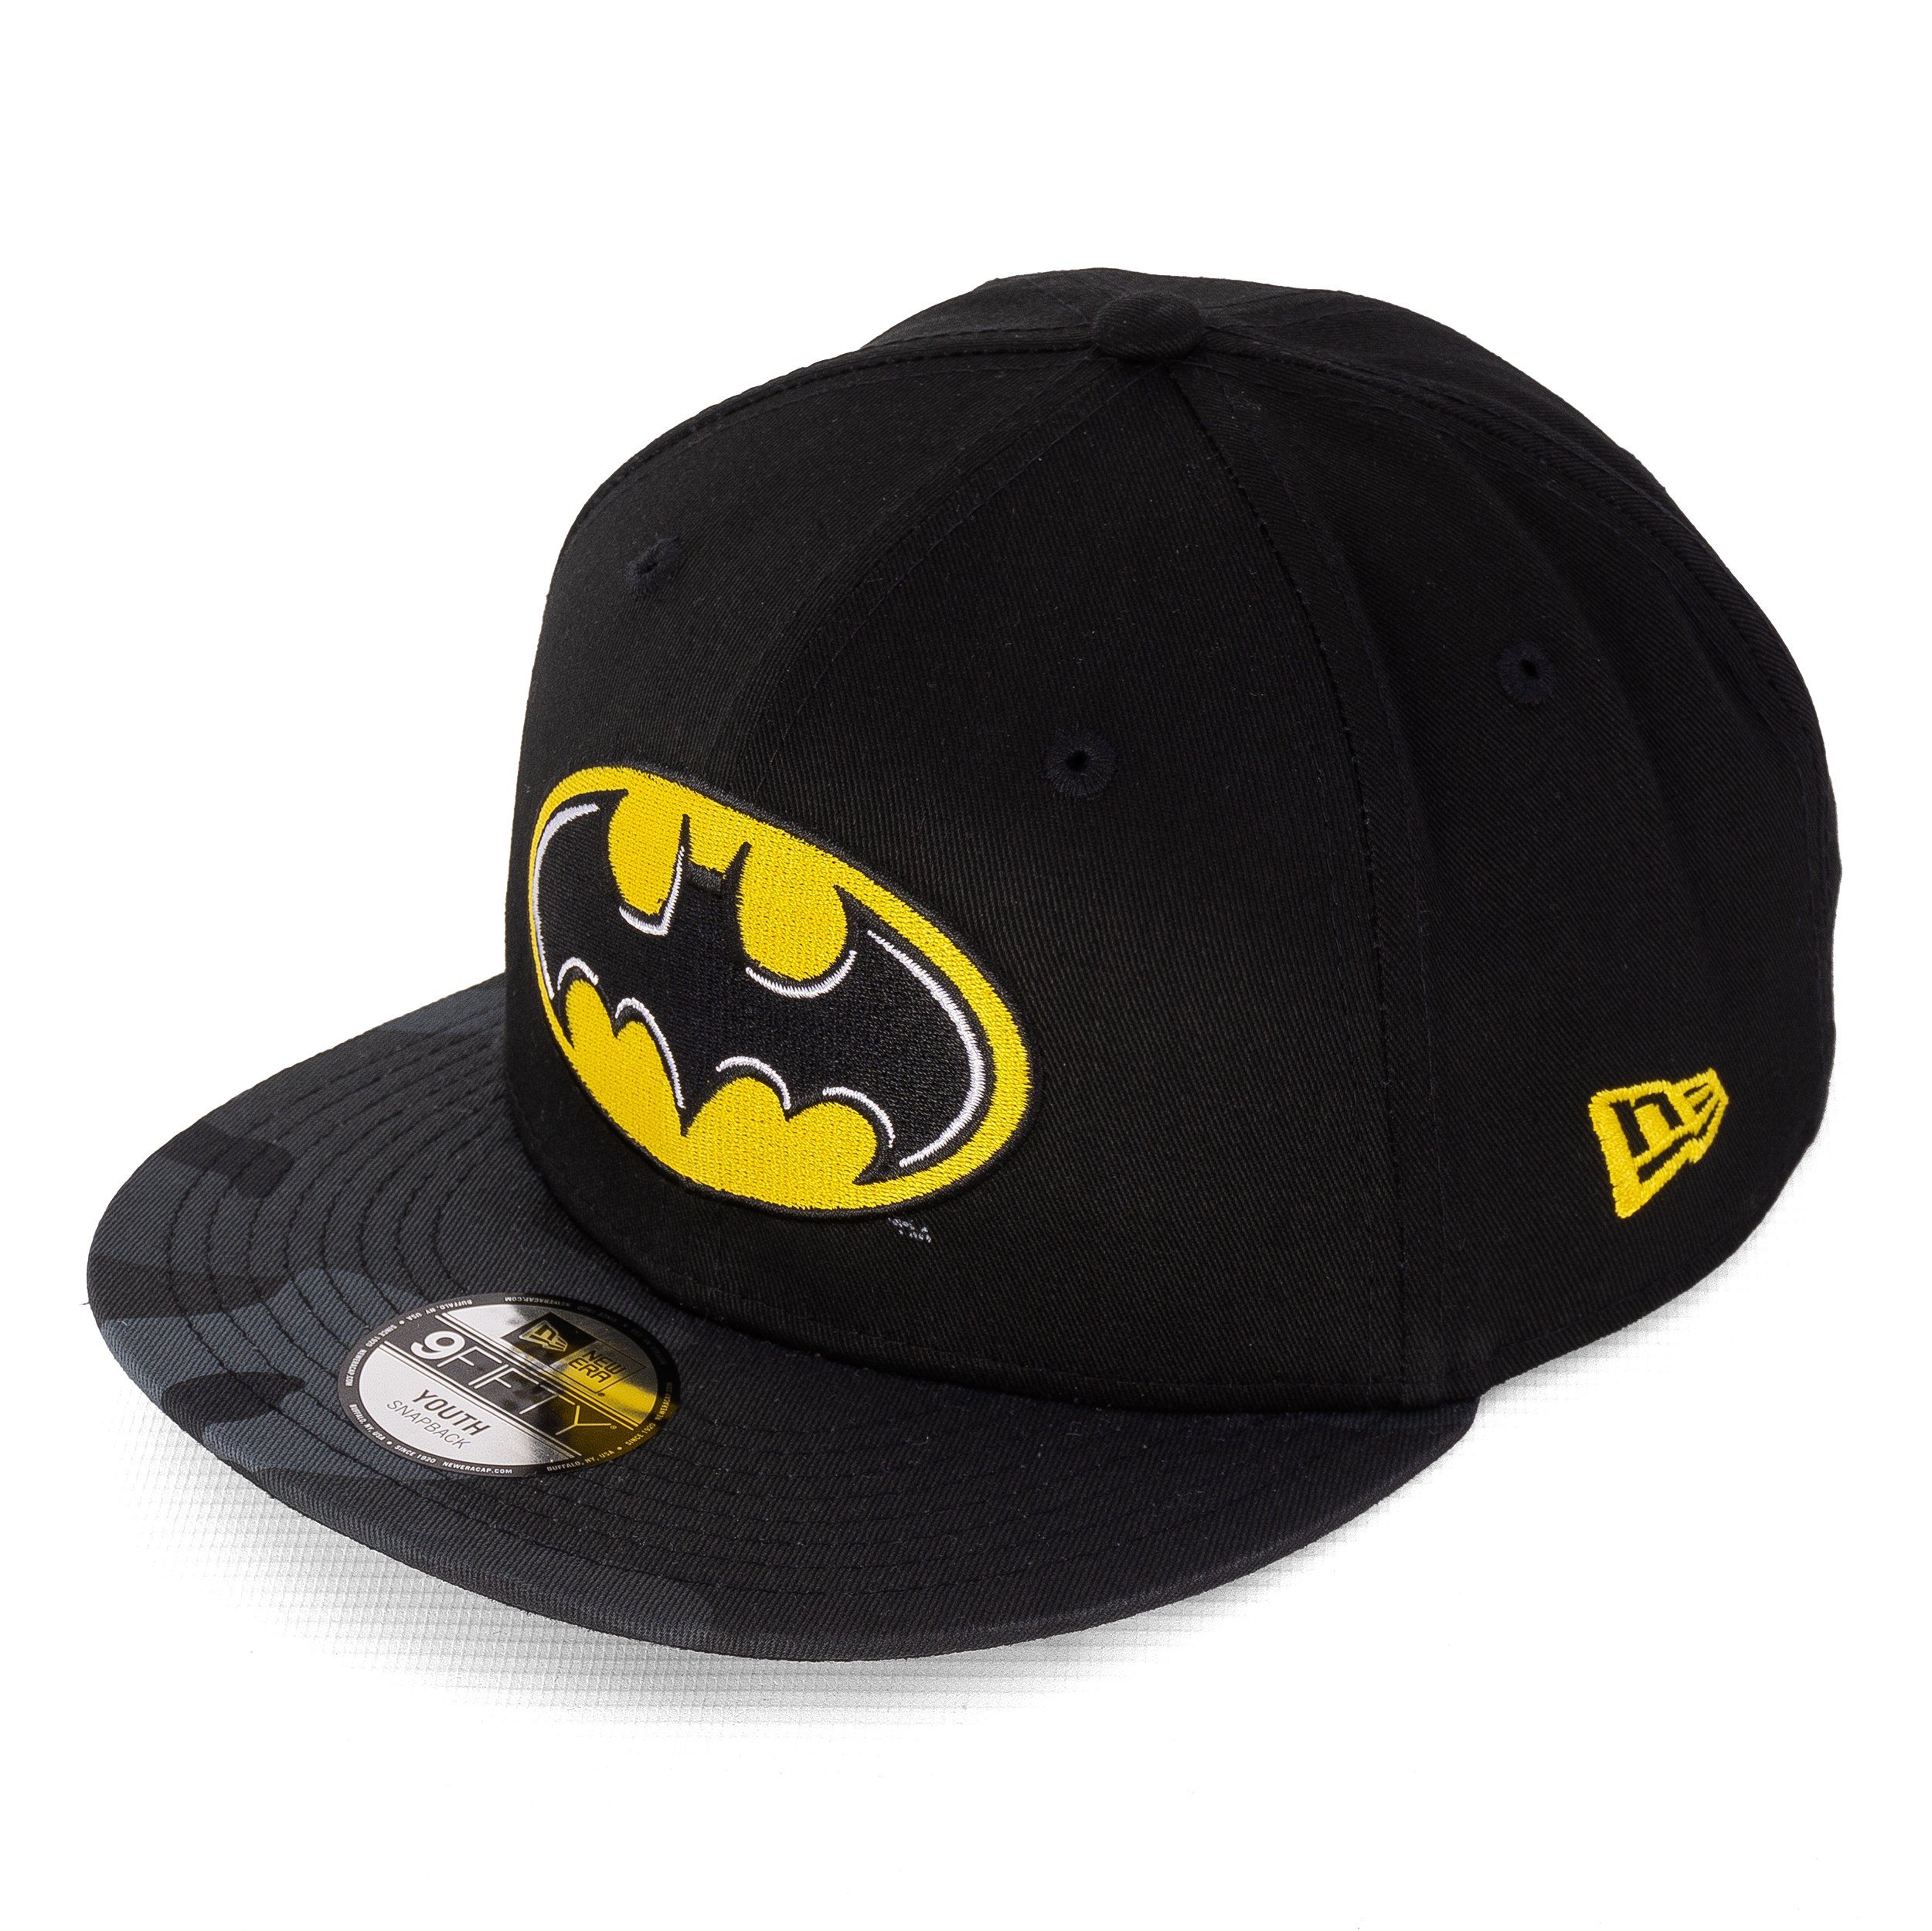 Baseball Cap New 9Fifty Era Batman Era Cap New (1-St)